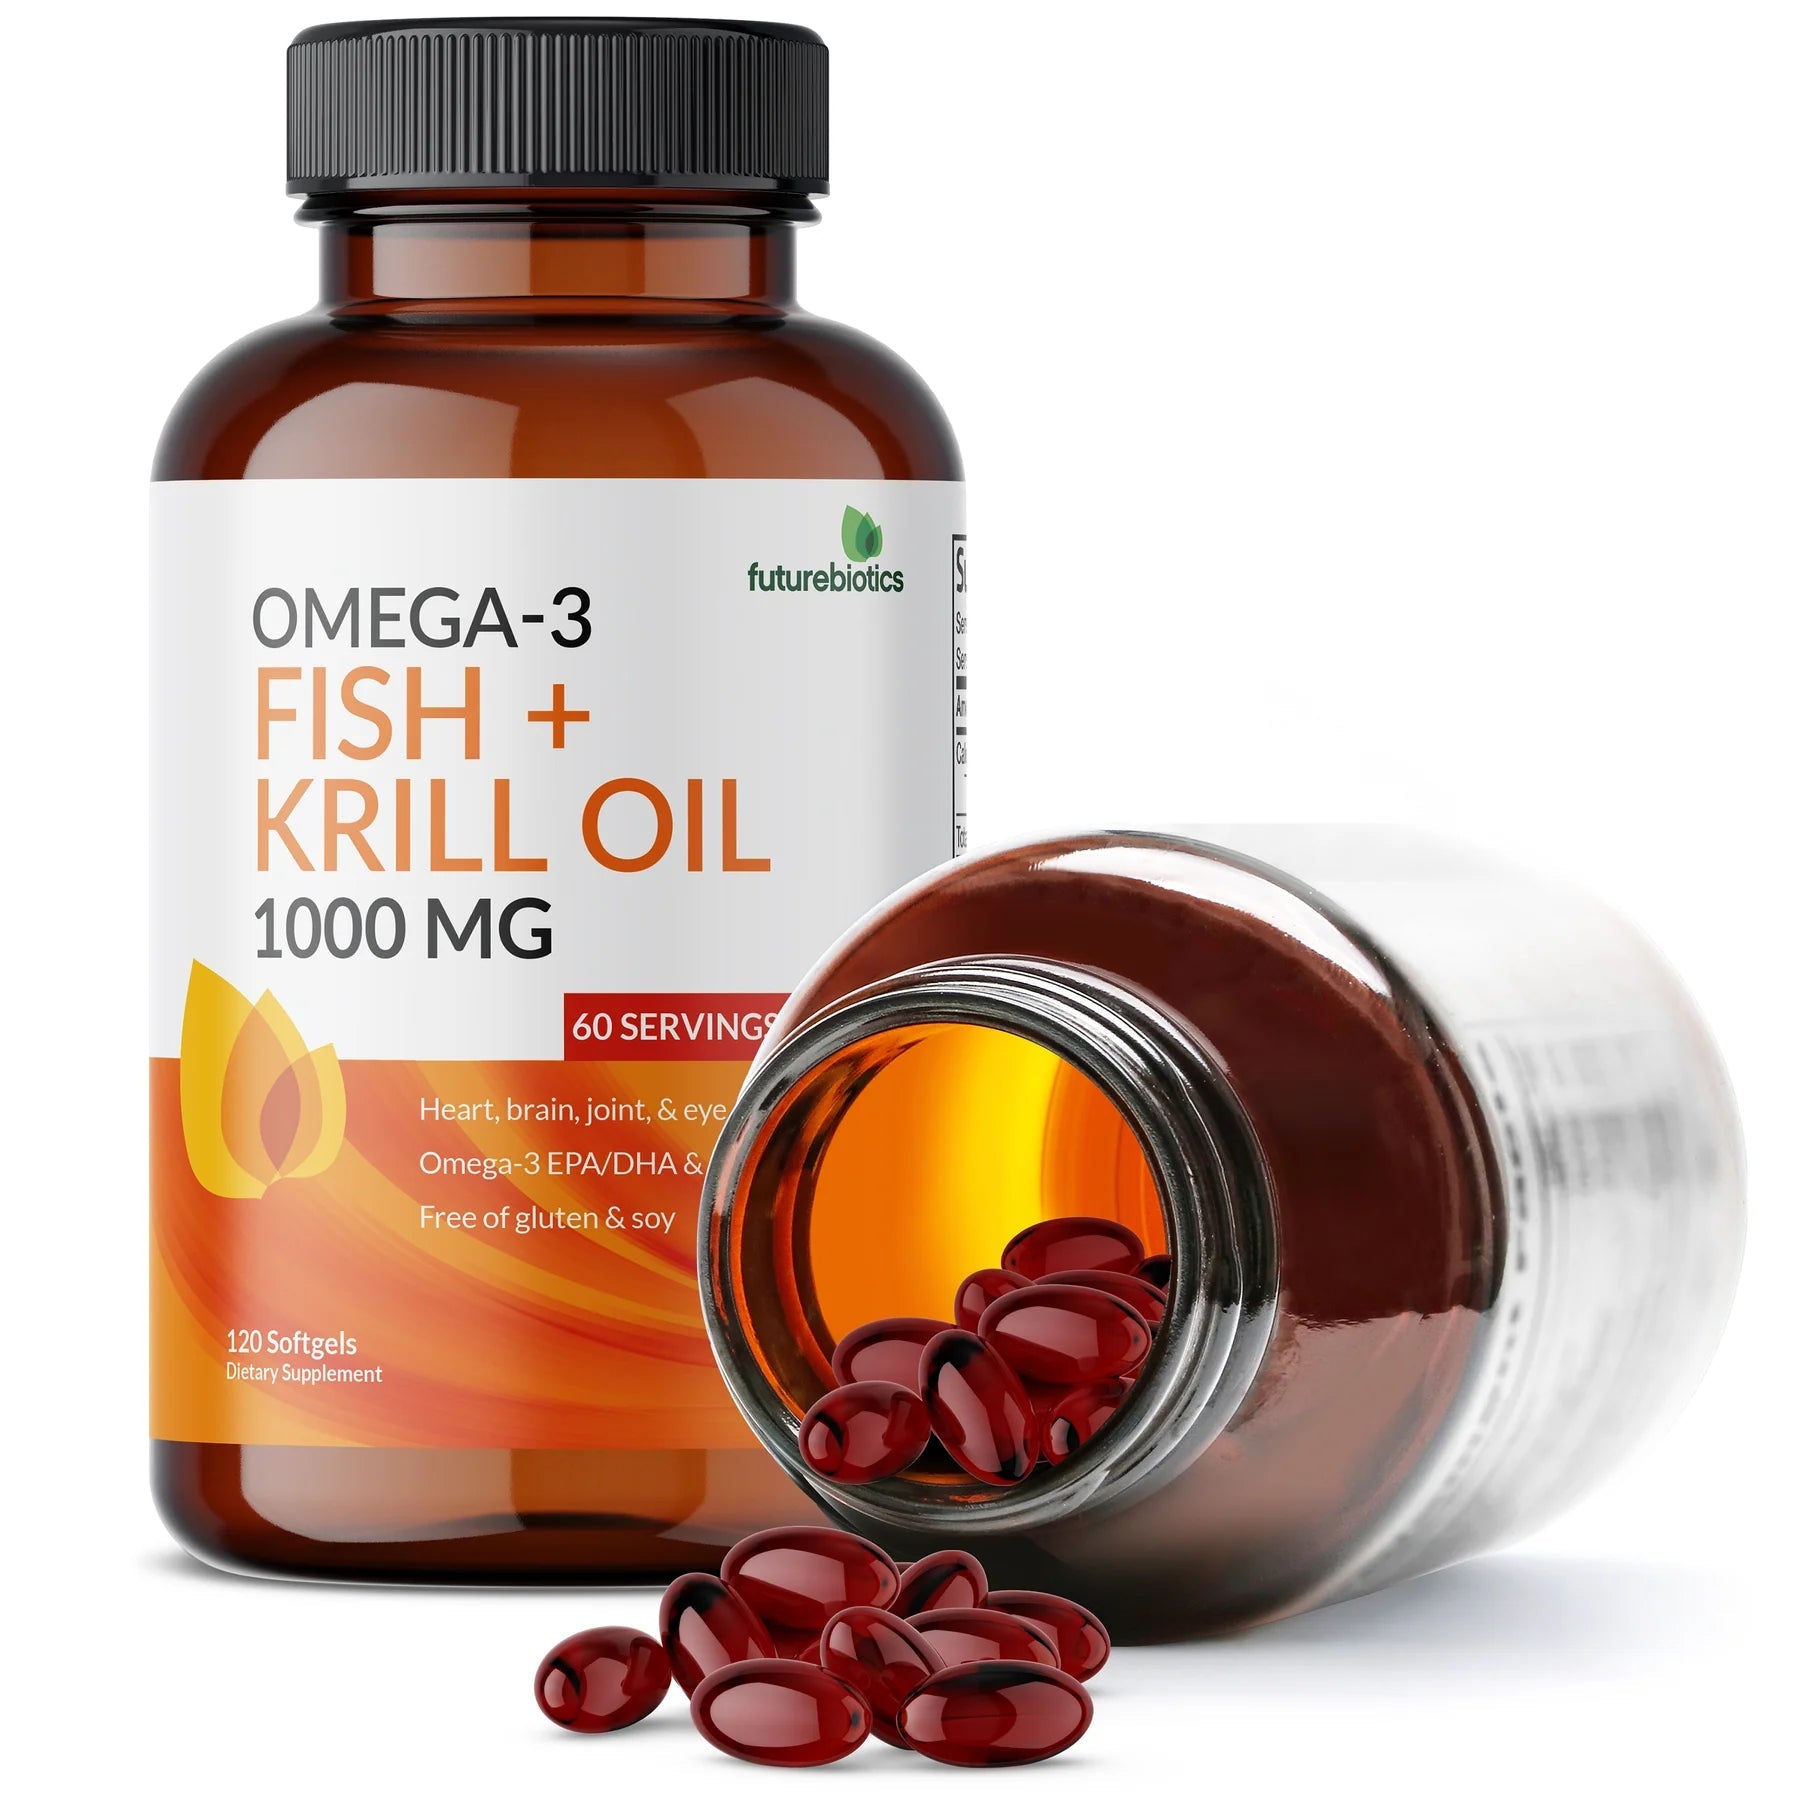 Futurebiotics Omega-3 Fish + Krill Oil with Astaxanthin For Heart Health, 1000 MG, Non- GMO 120 Softgels